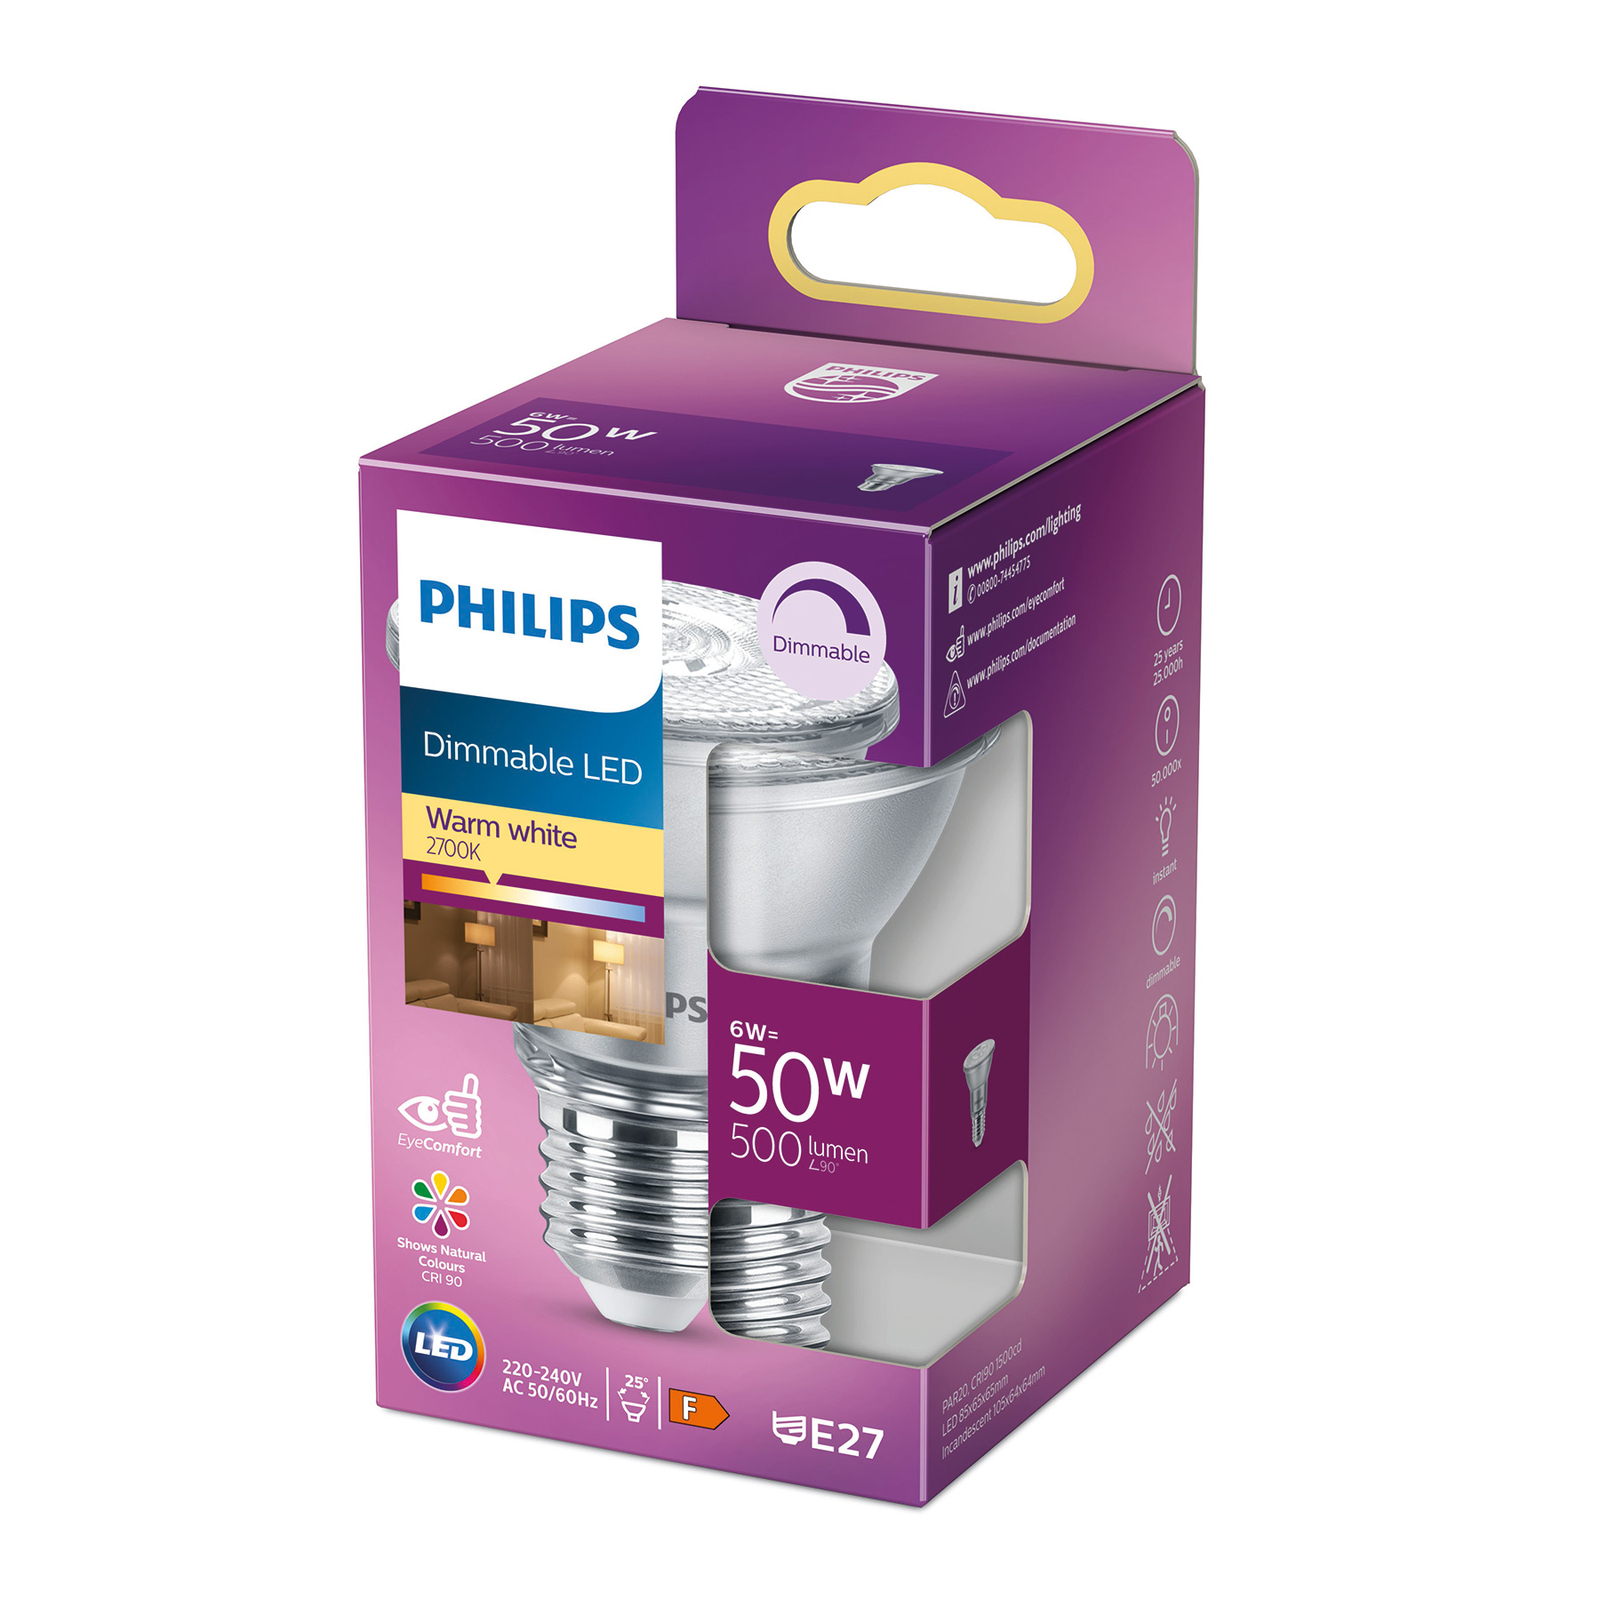 Philips E27 PAR20 reflector LED bulb, 6 W 2,700 K